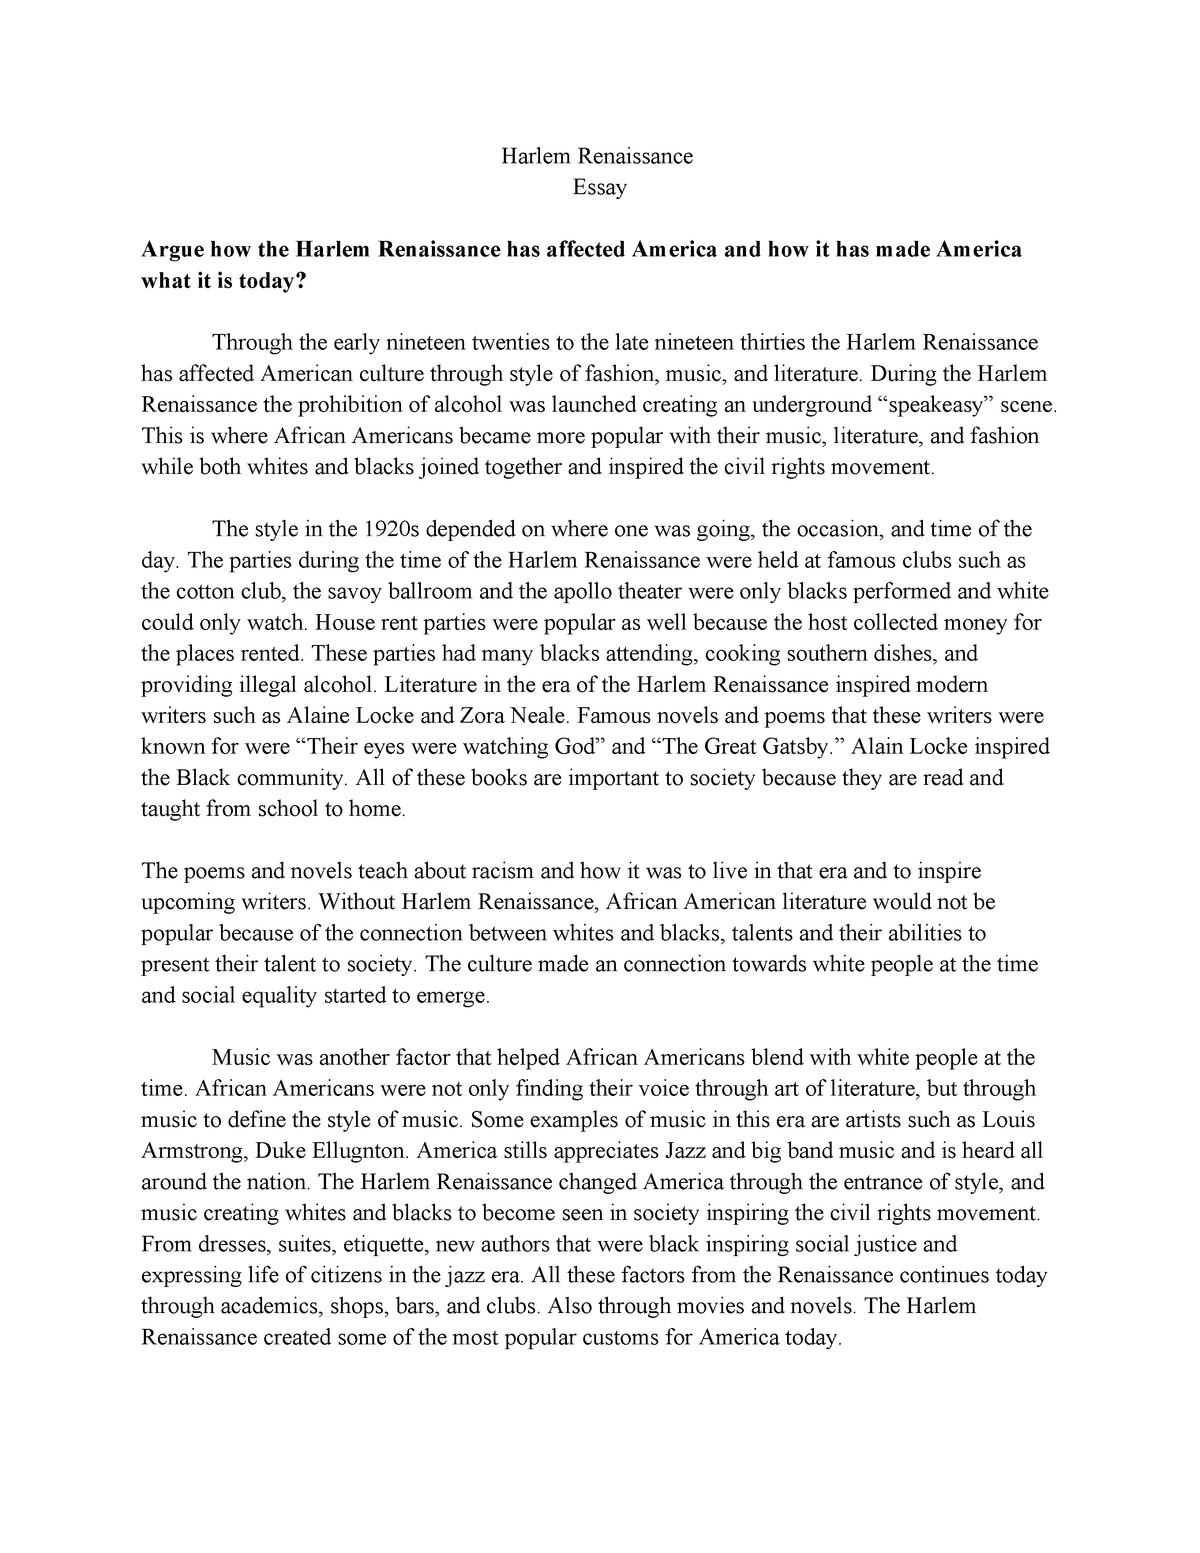 thesis statement for harlem renaissance